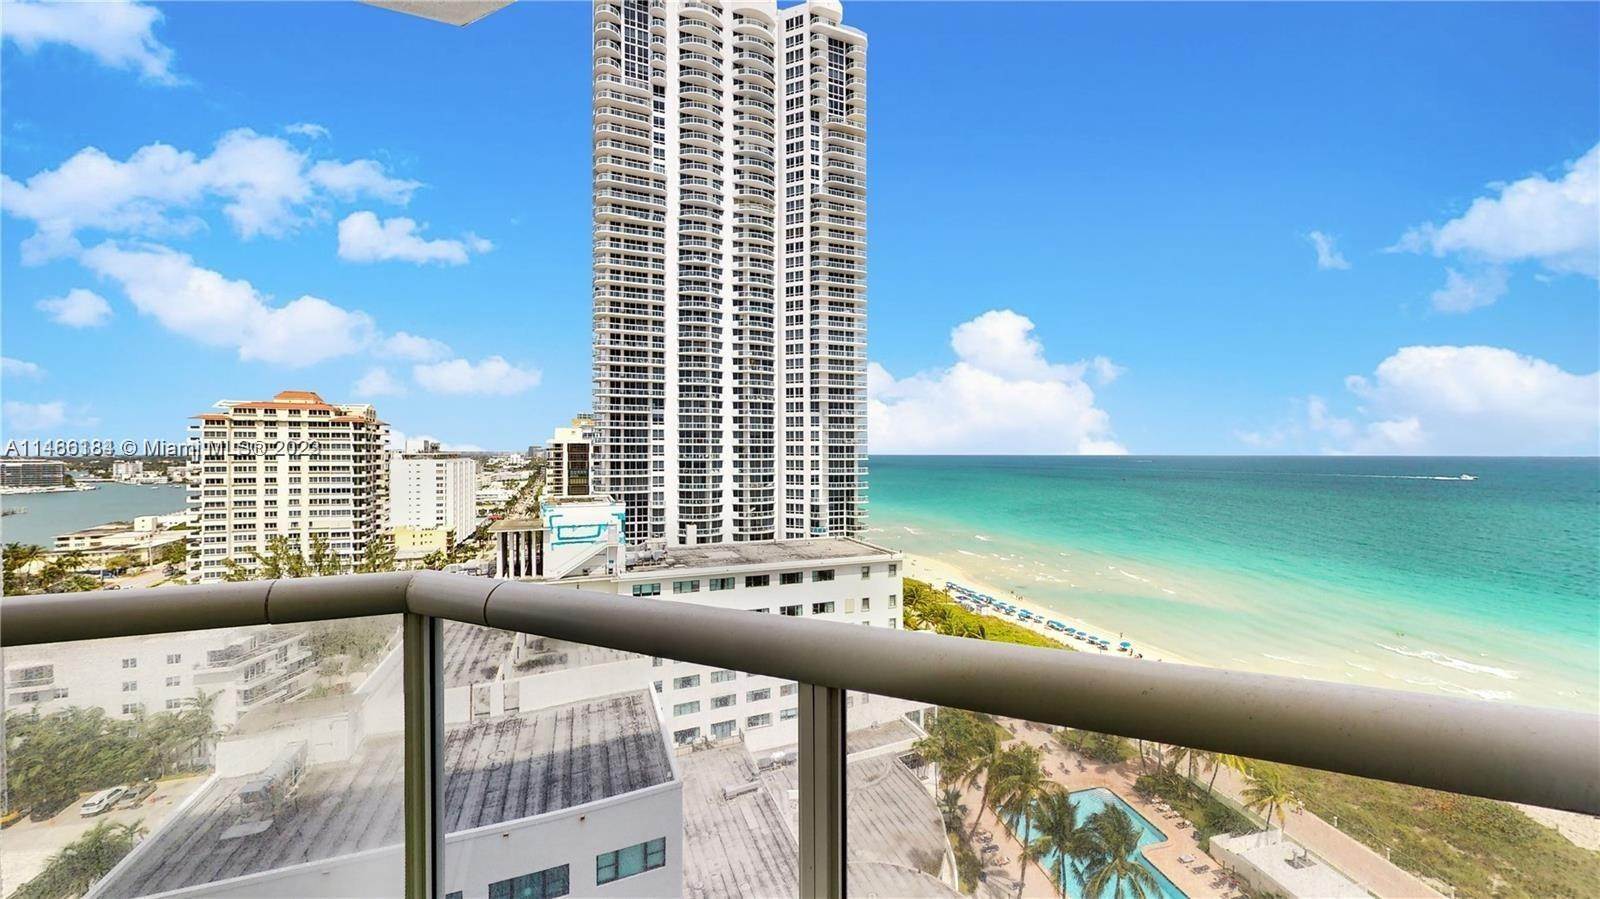 Condominiums for Sale at Millionaires Row, Miami Beach, FL 33141